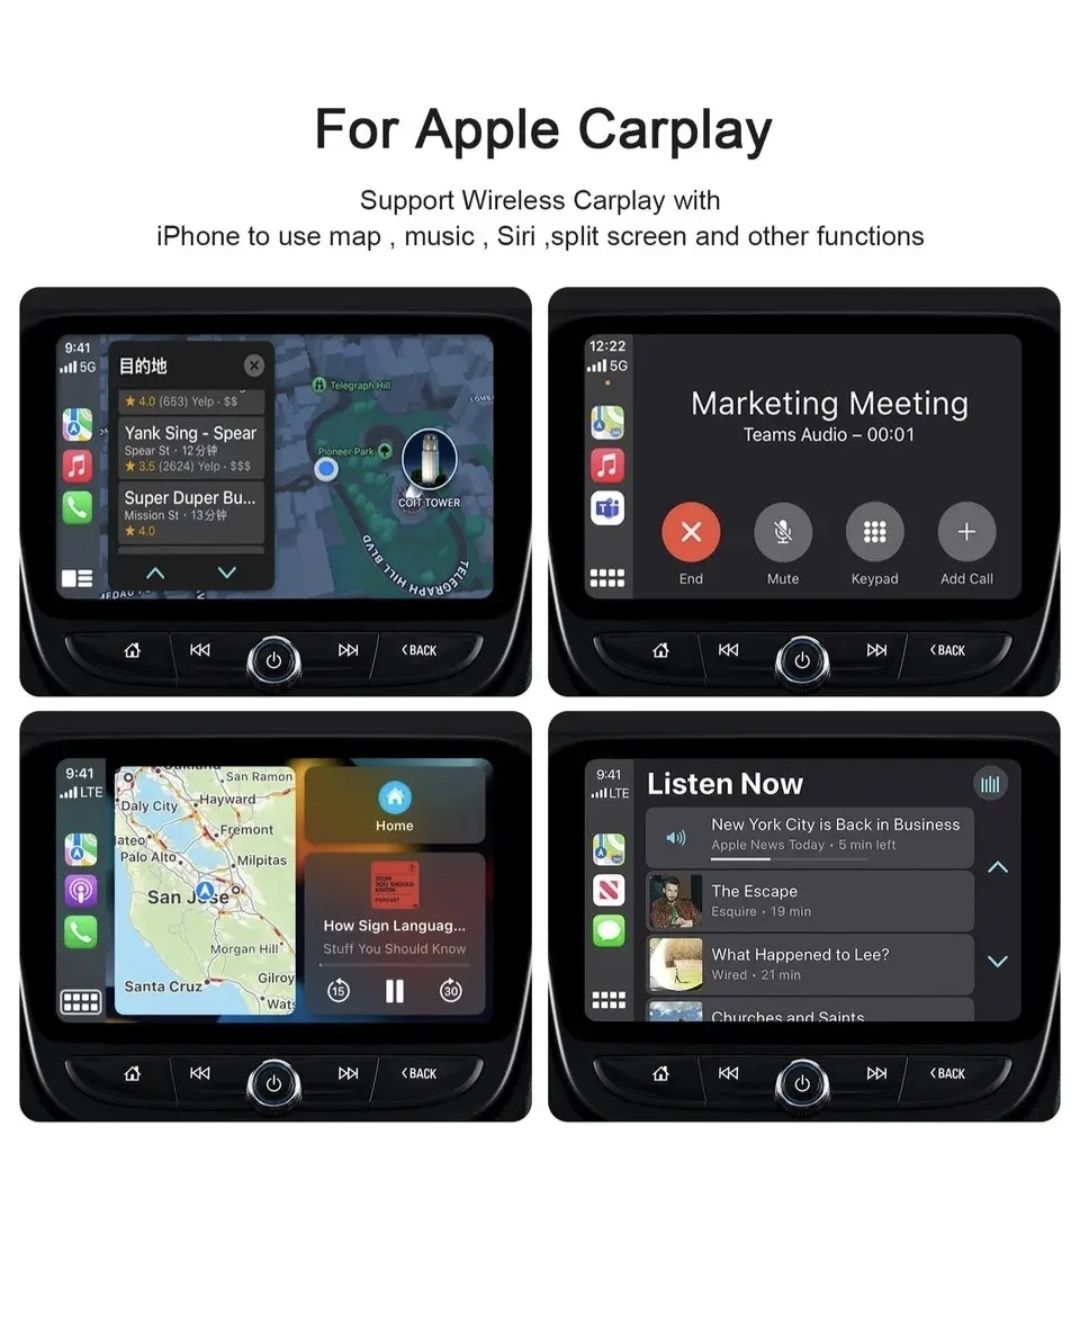 Беспроводной адаптер CarPlay iPhone iOS 10+ Wireless Dongle White